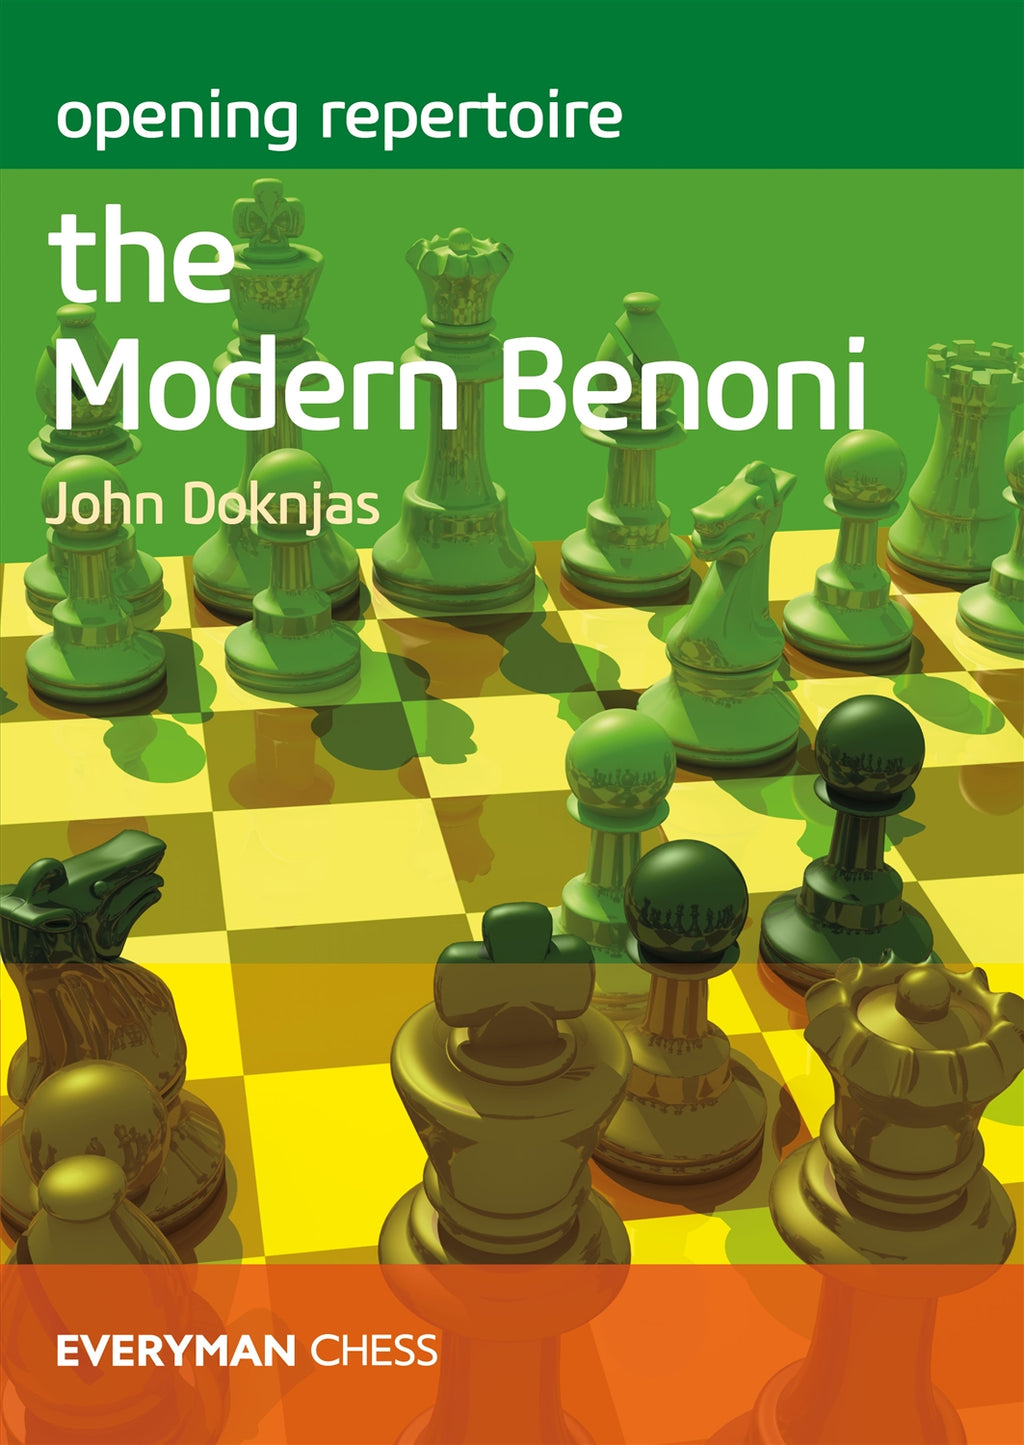 Opening For White - Beating The Modern Benoni Defense! 